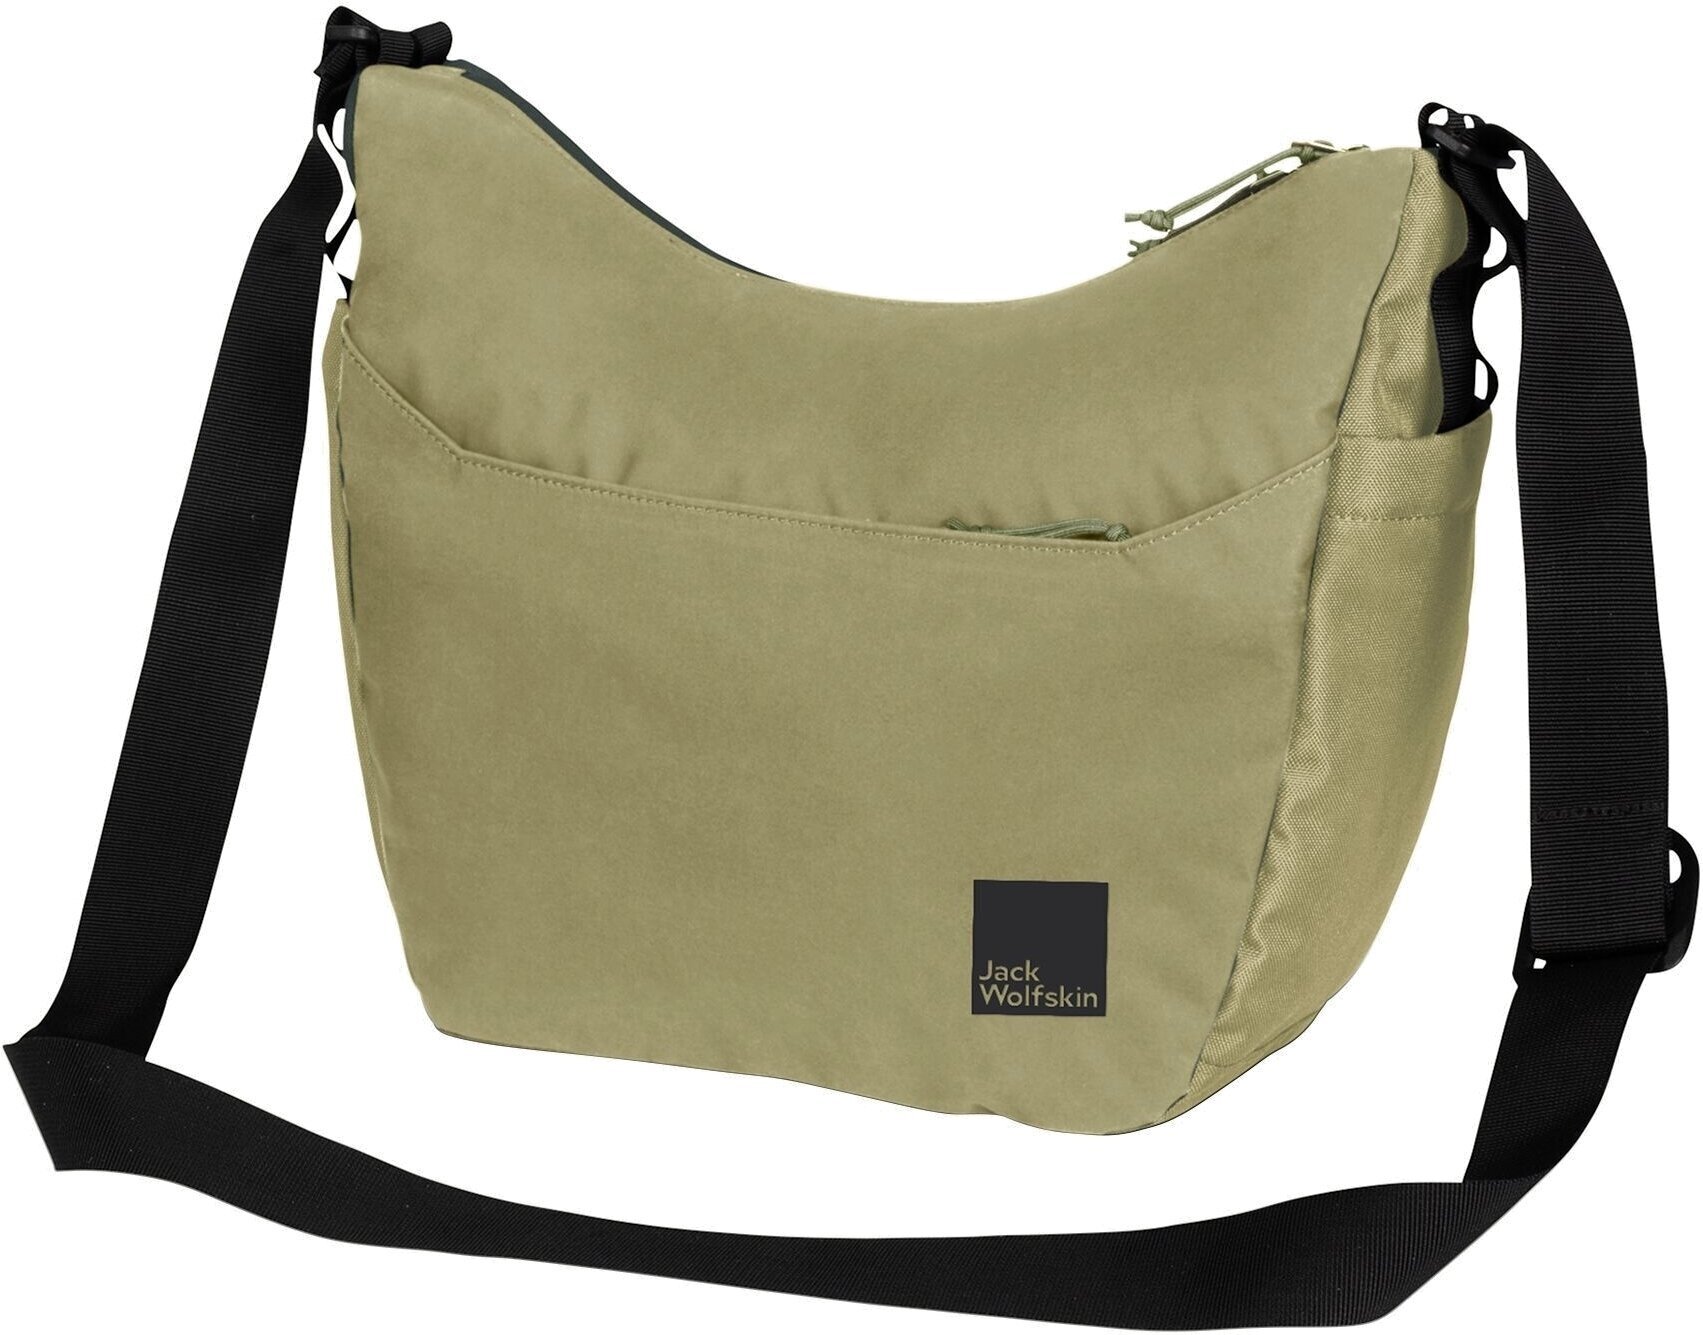 Lifestyle Backpack / Bag Jack Wolfskin Burgweg Bay Leaf Backpack